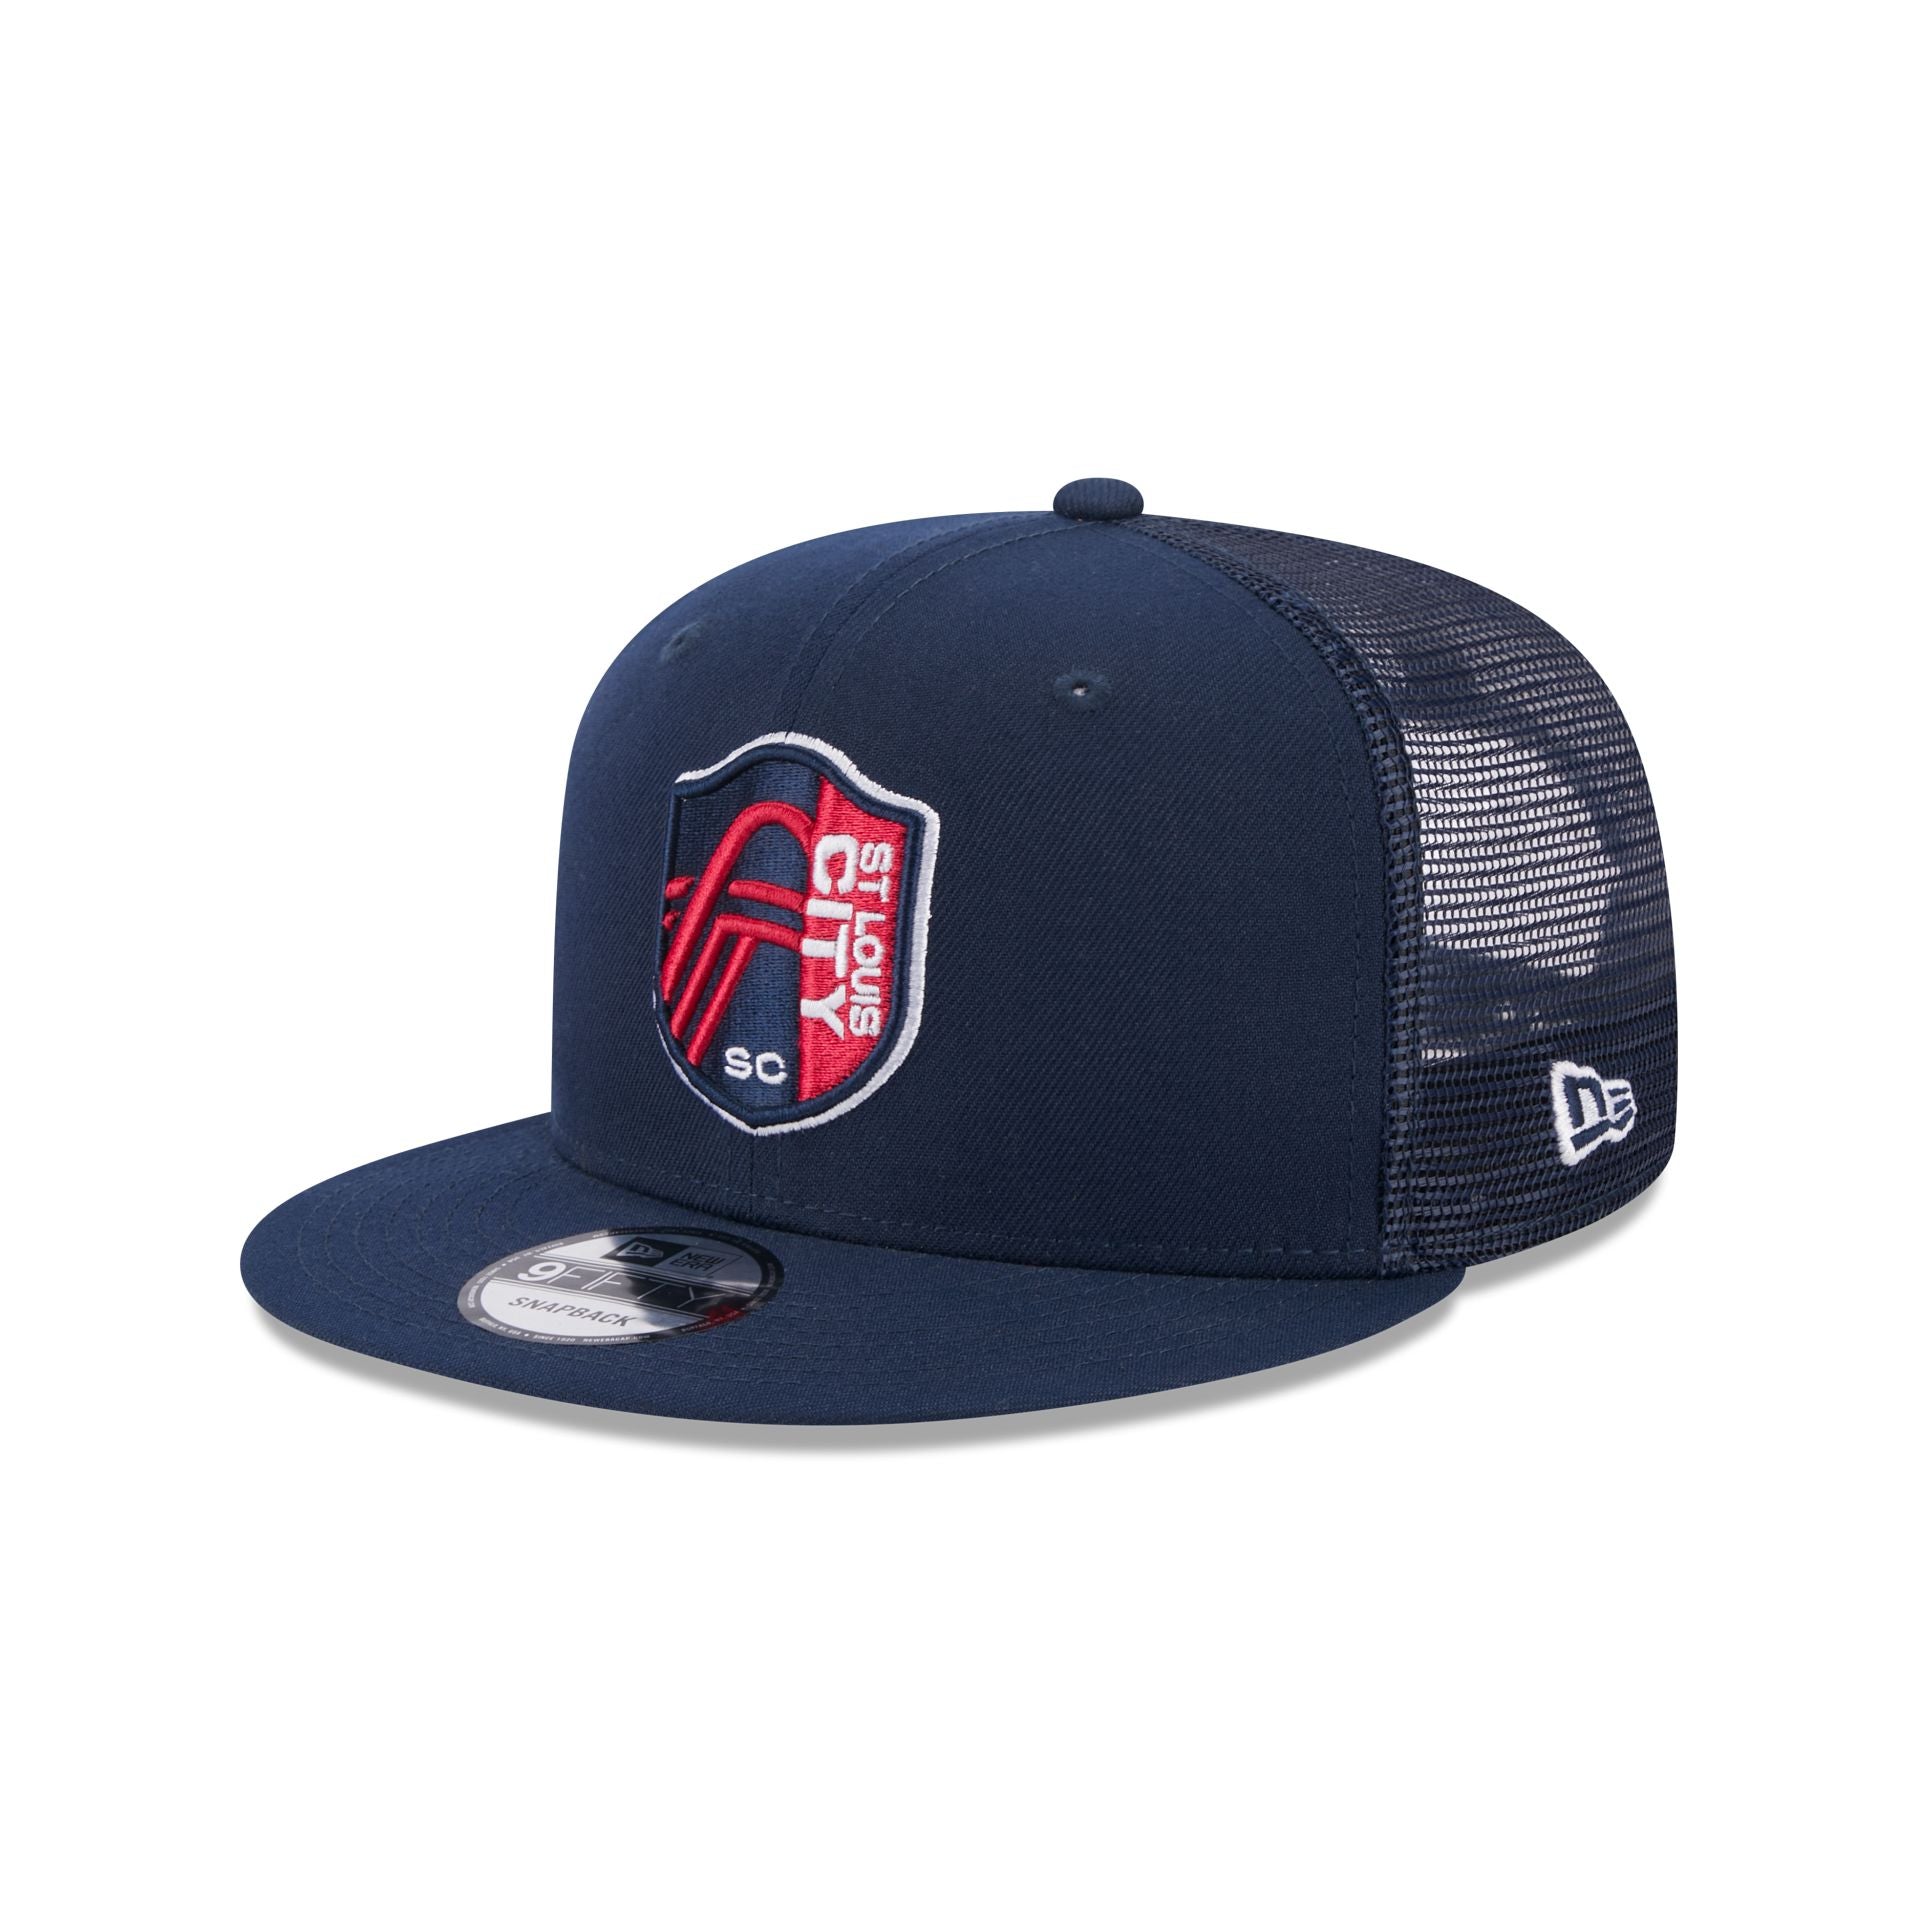 St Louis City SC New Era Snapback Hat